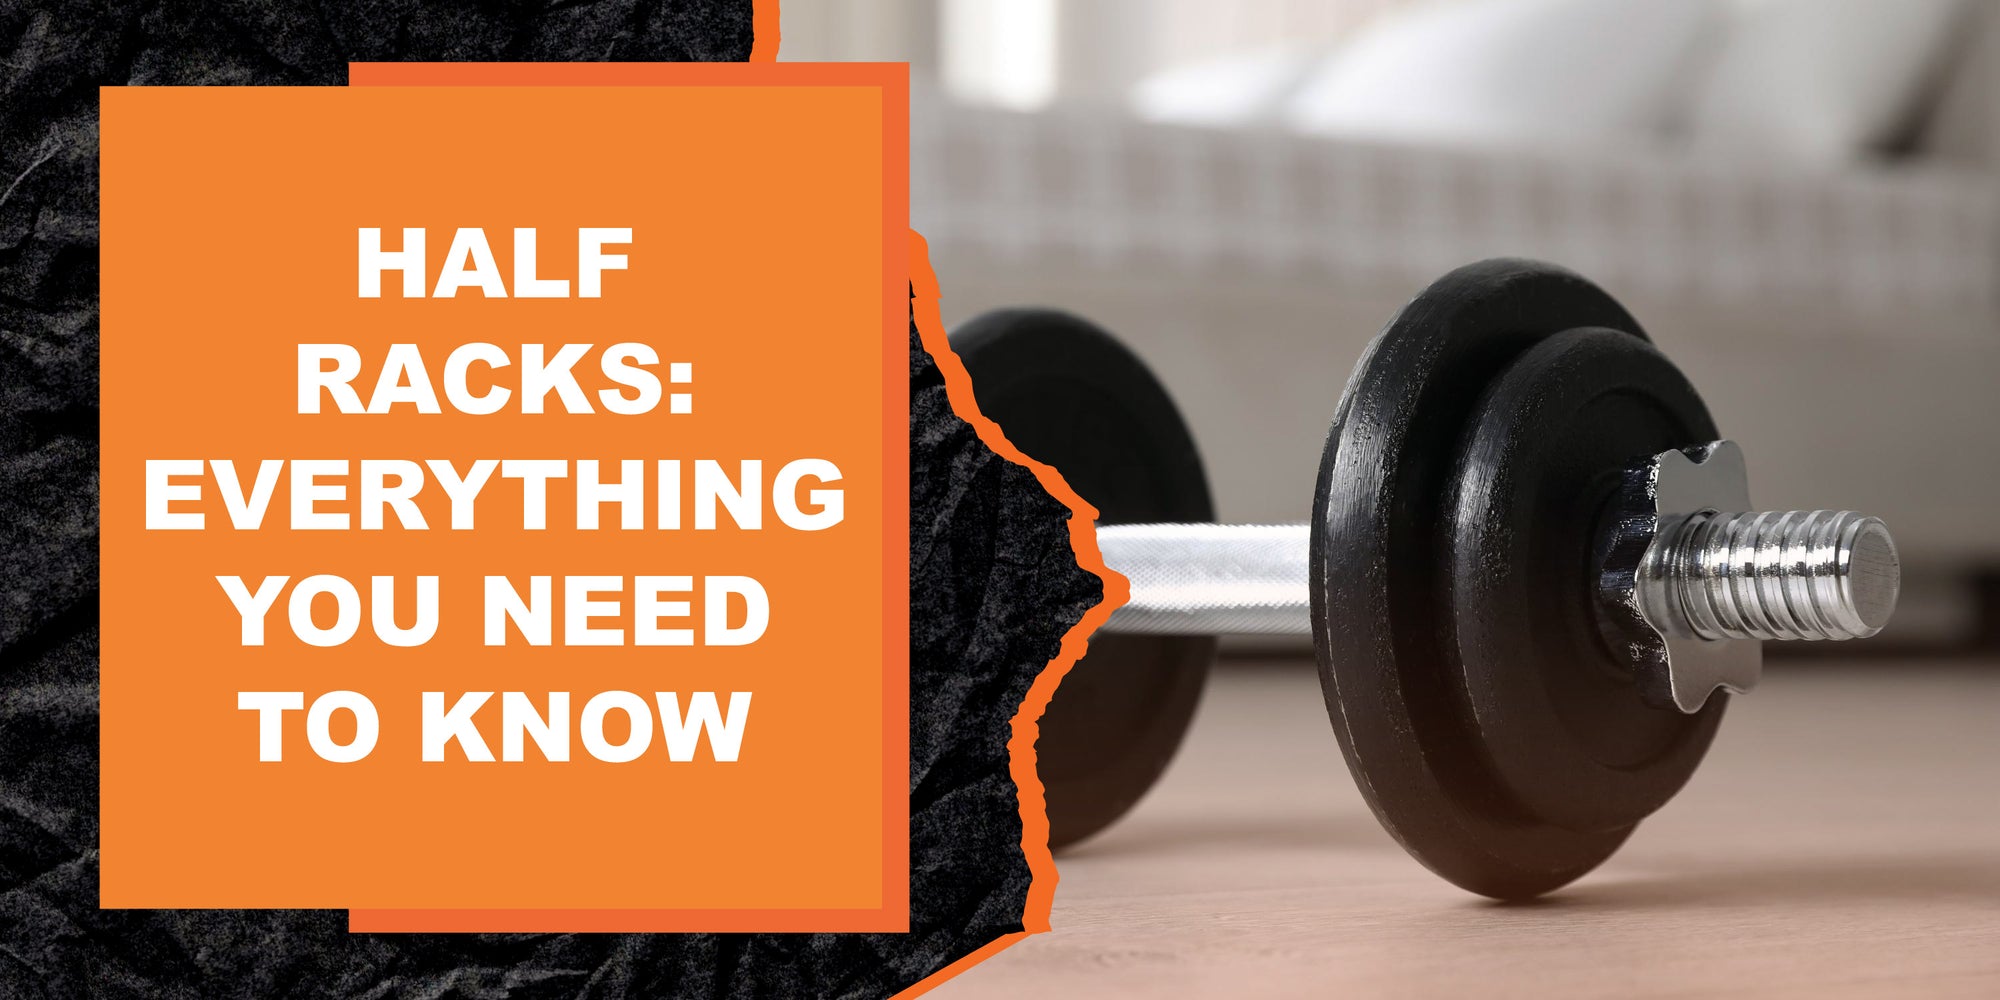 Half Racks: Everything You Need to Know